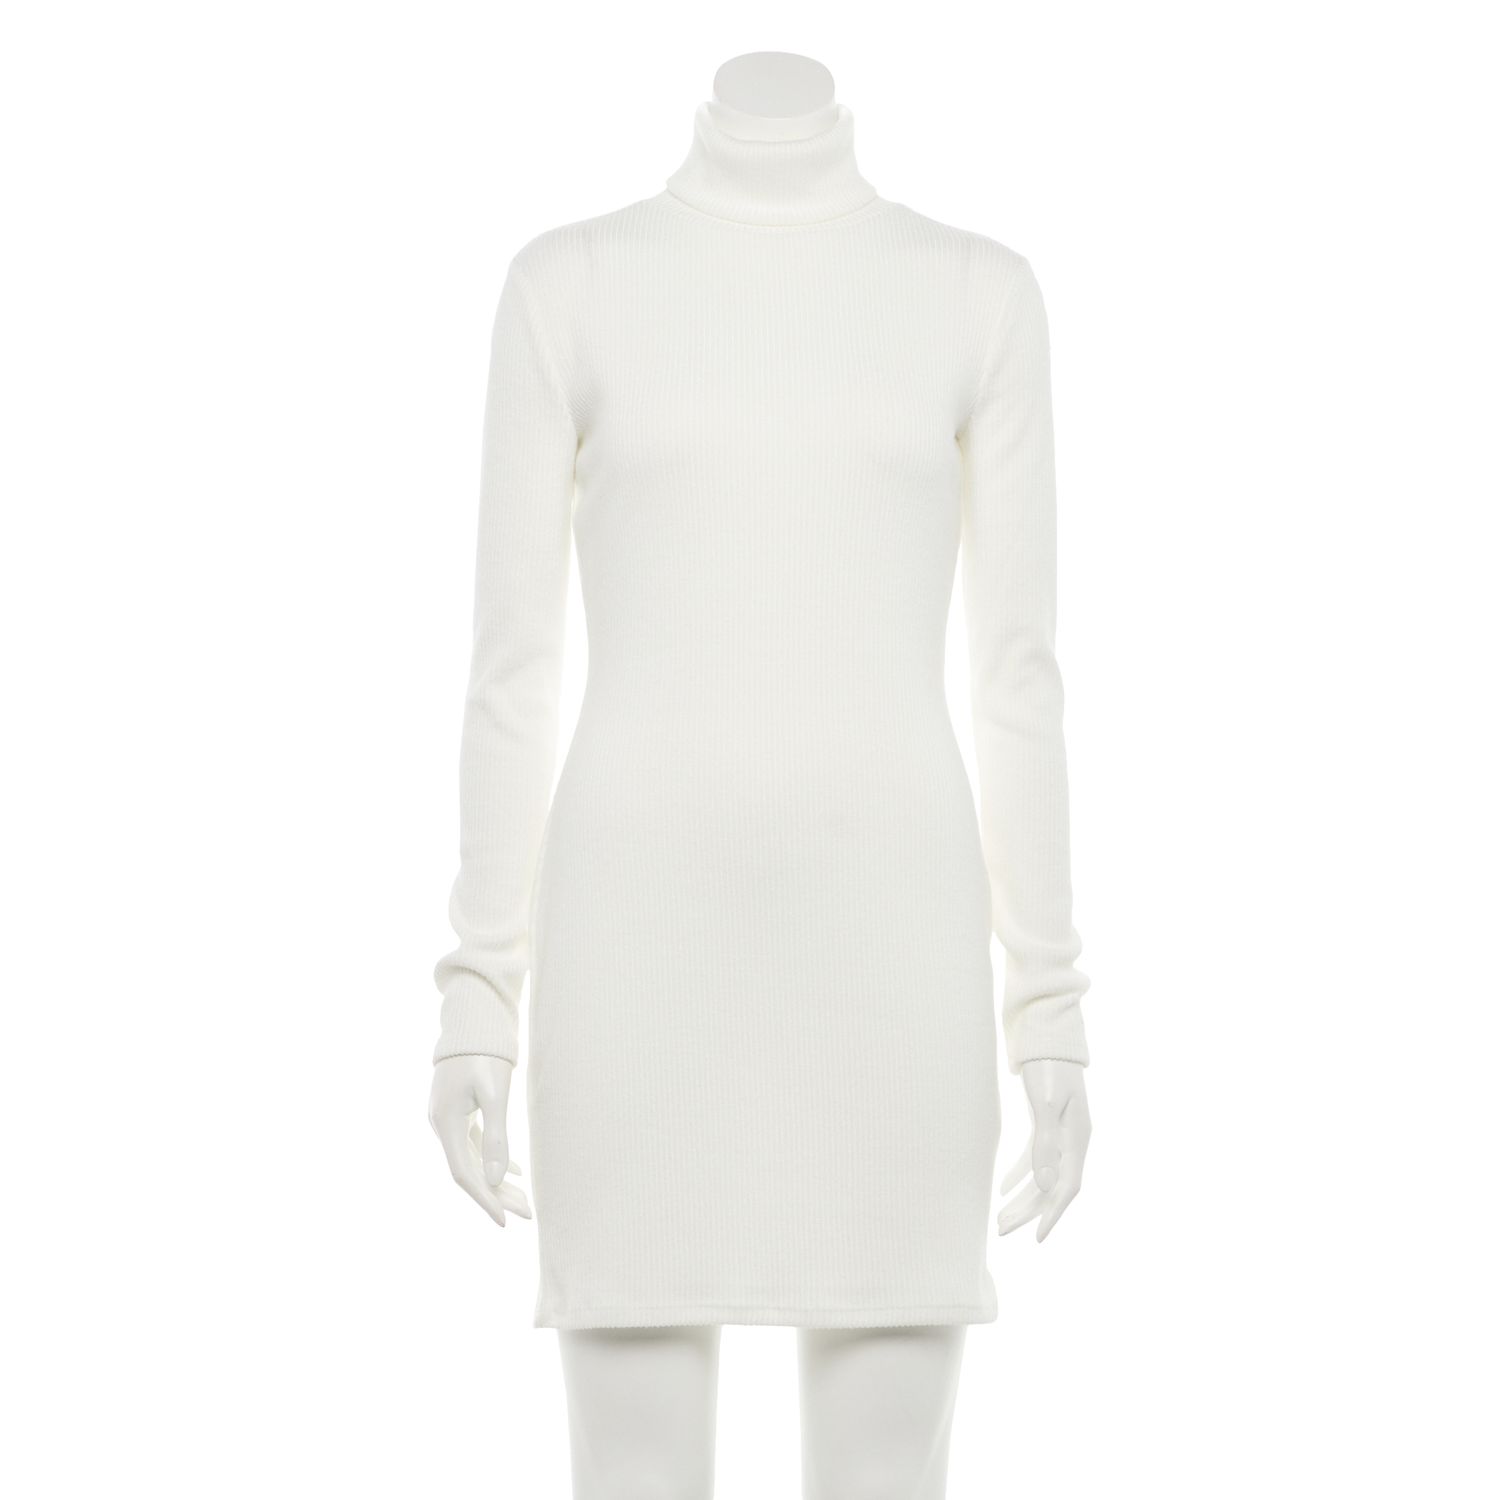 white casual dresses for juniors